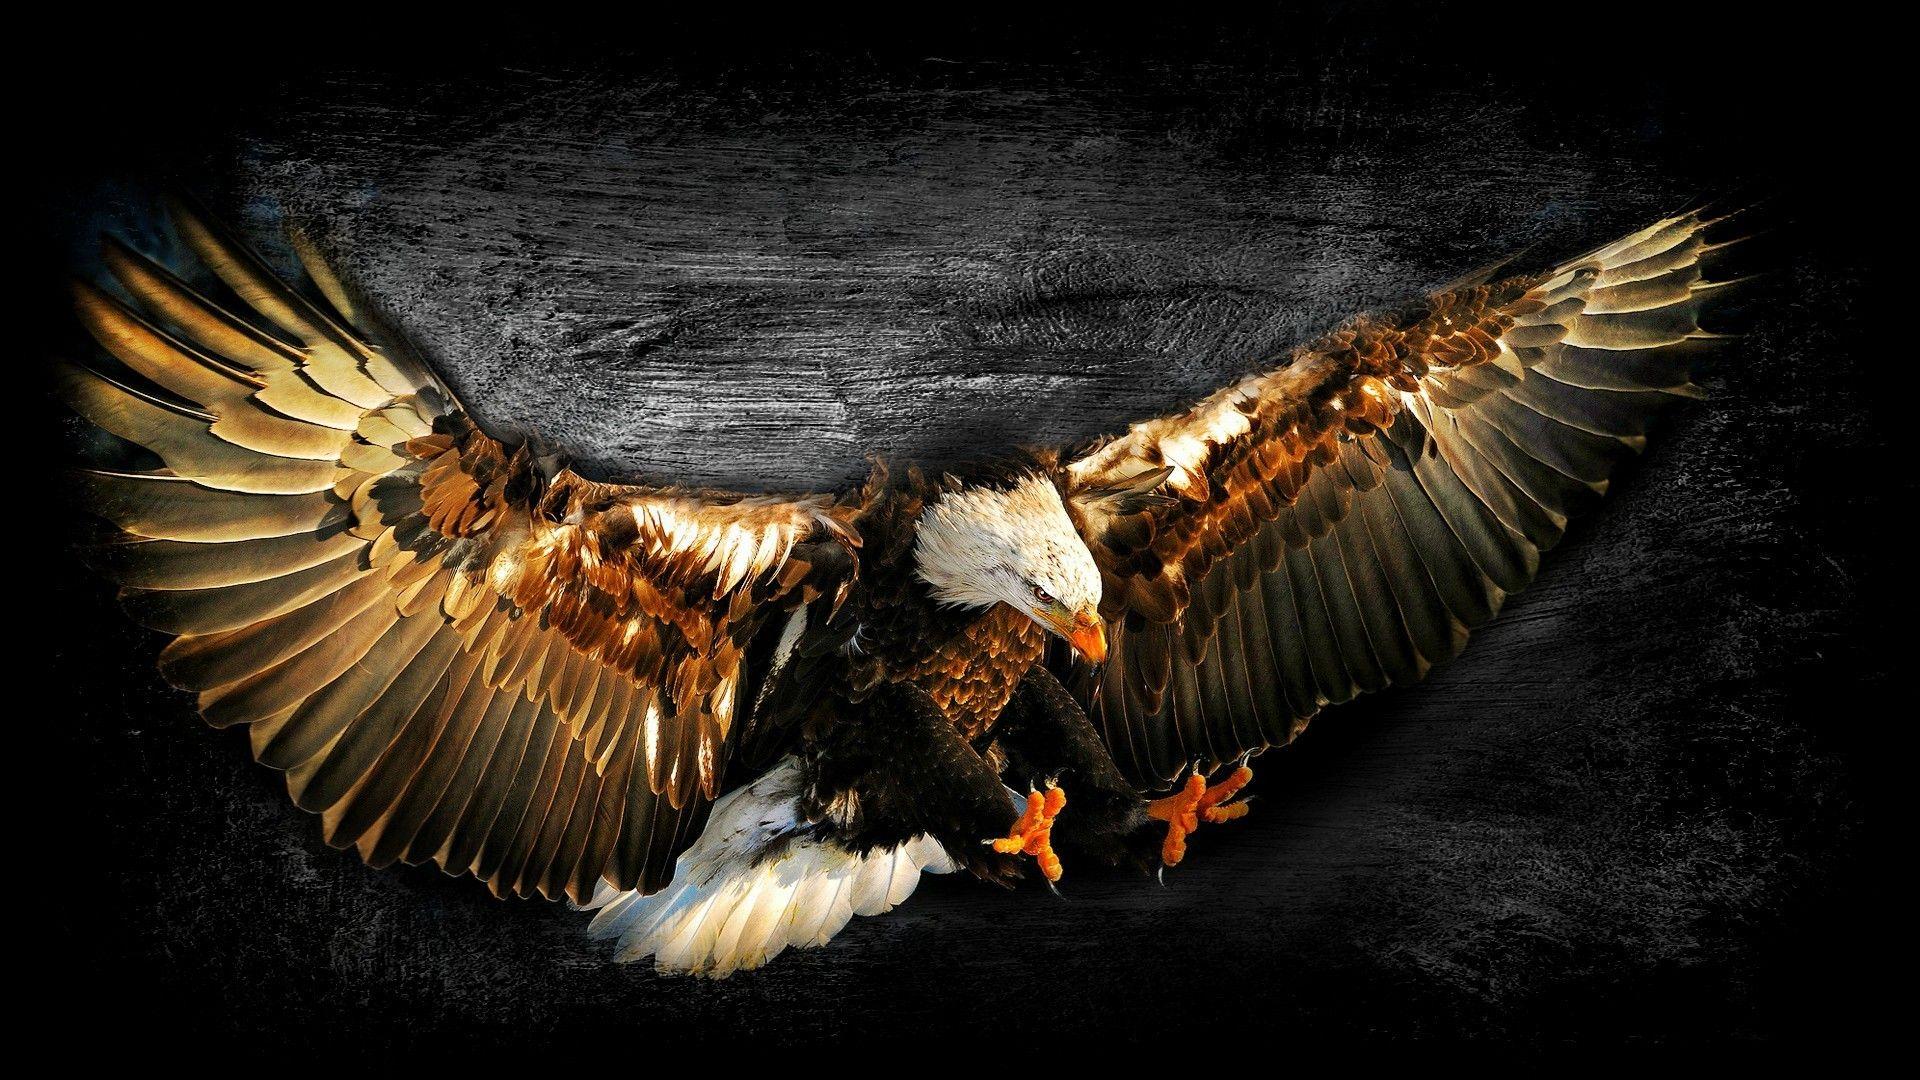 Bald eagle work of art wallpaper. PC